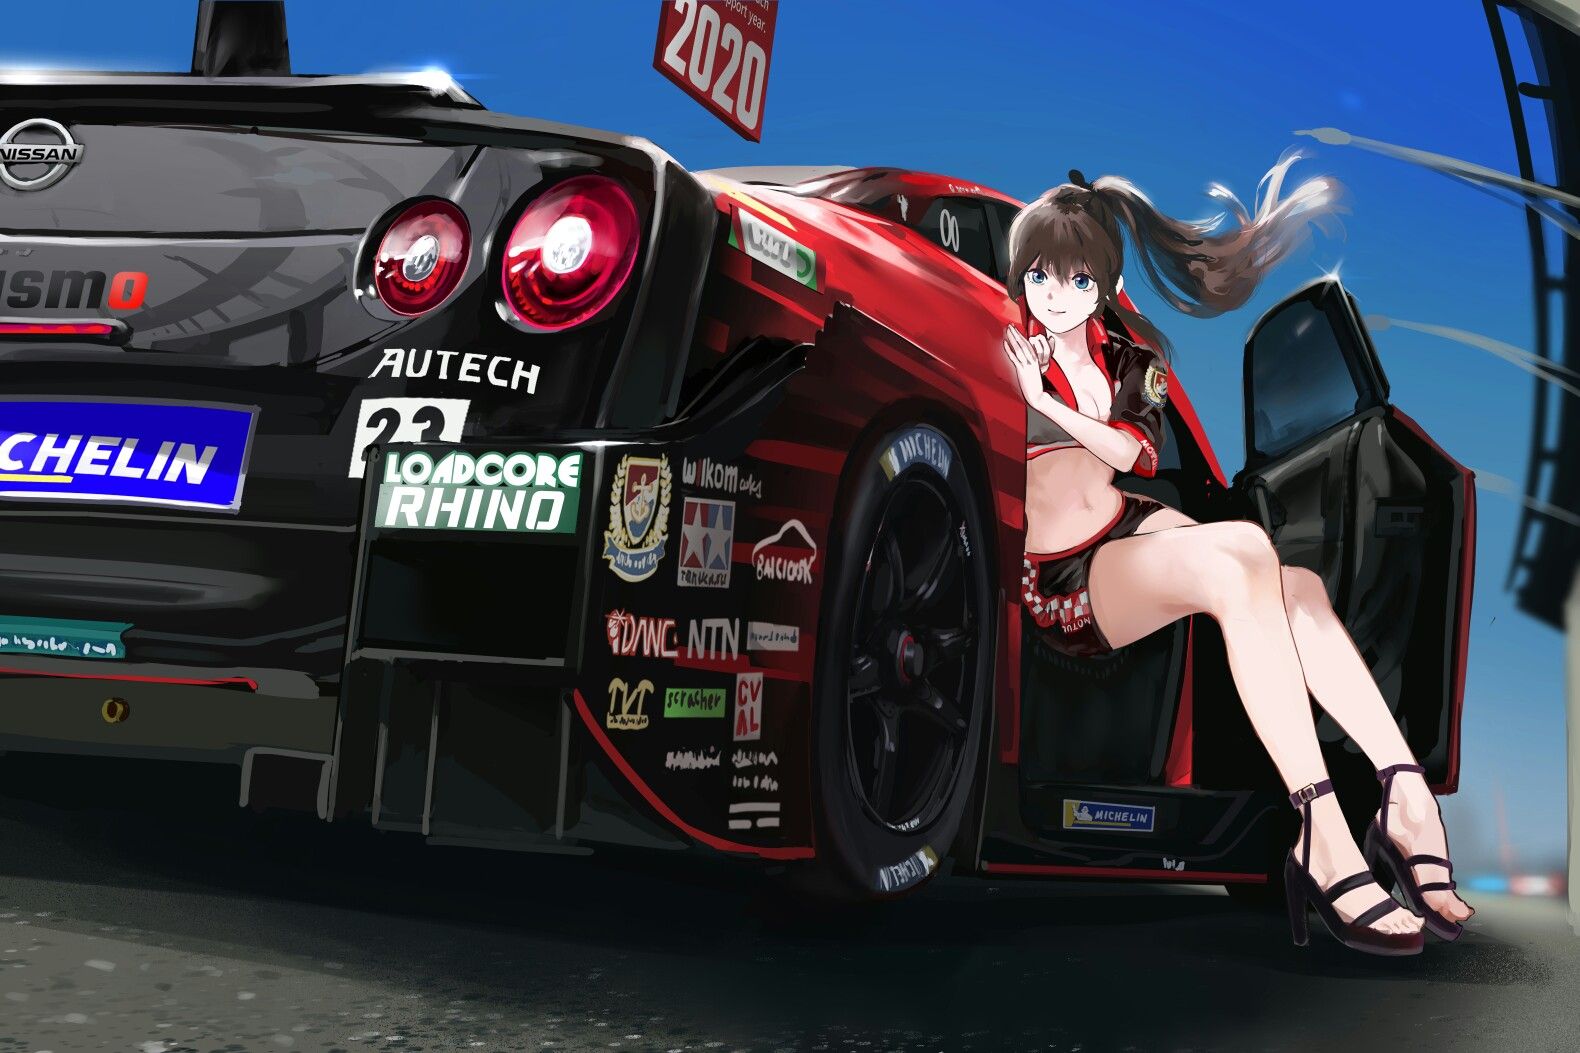 Racing. Anime motorcycle, Automotive artwork, Art cars